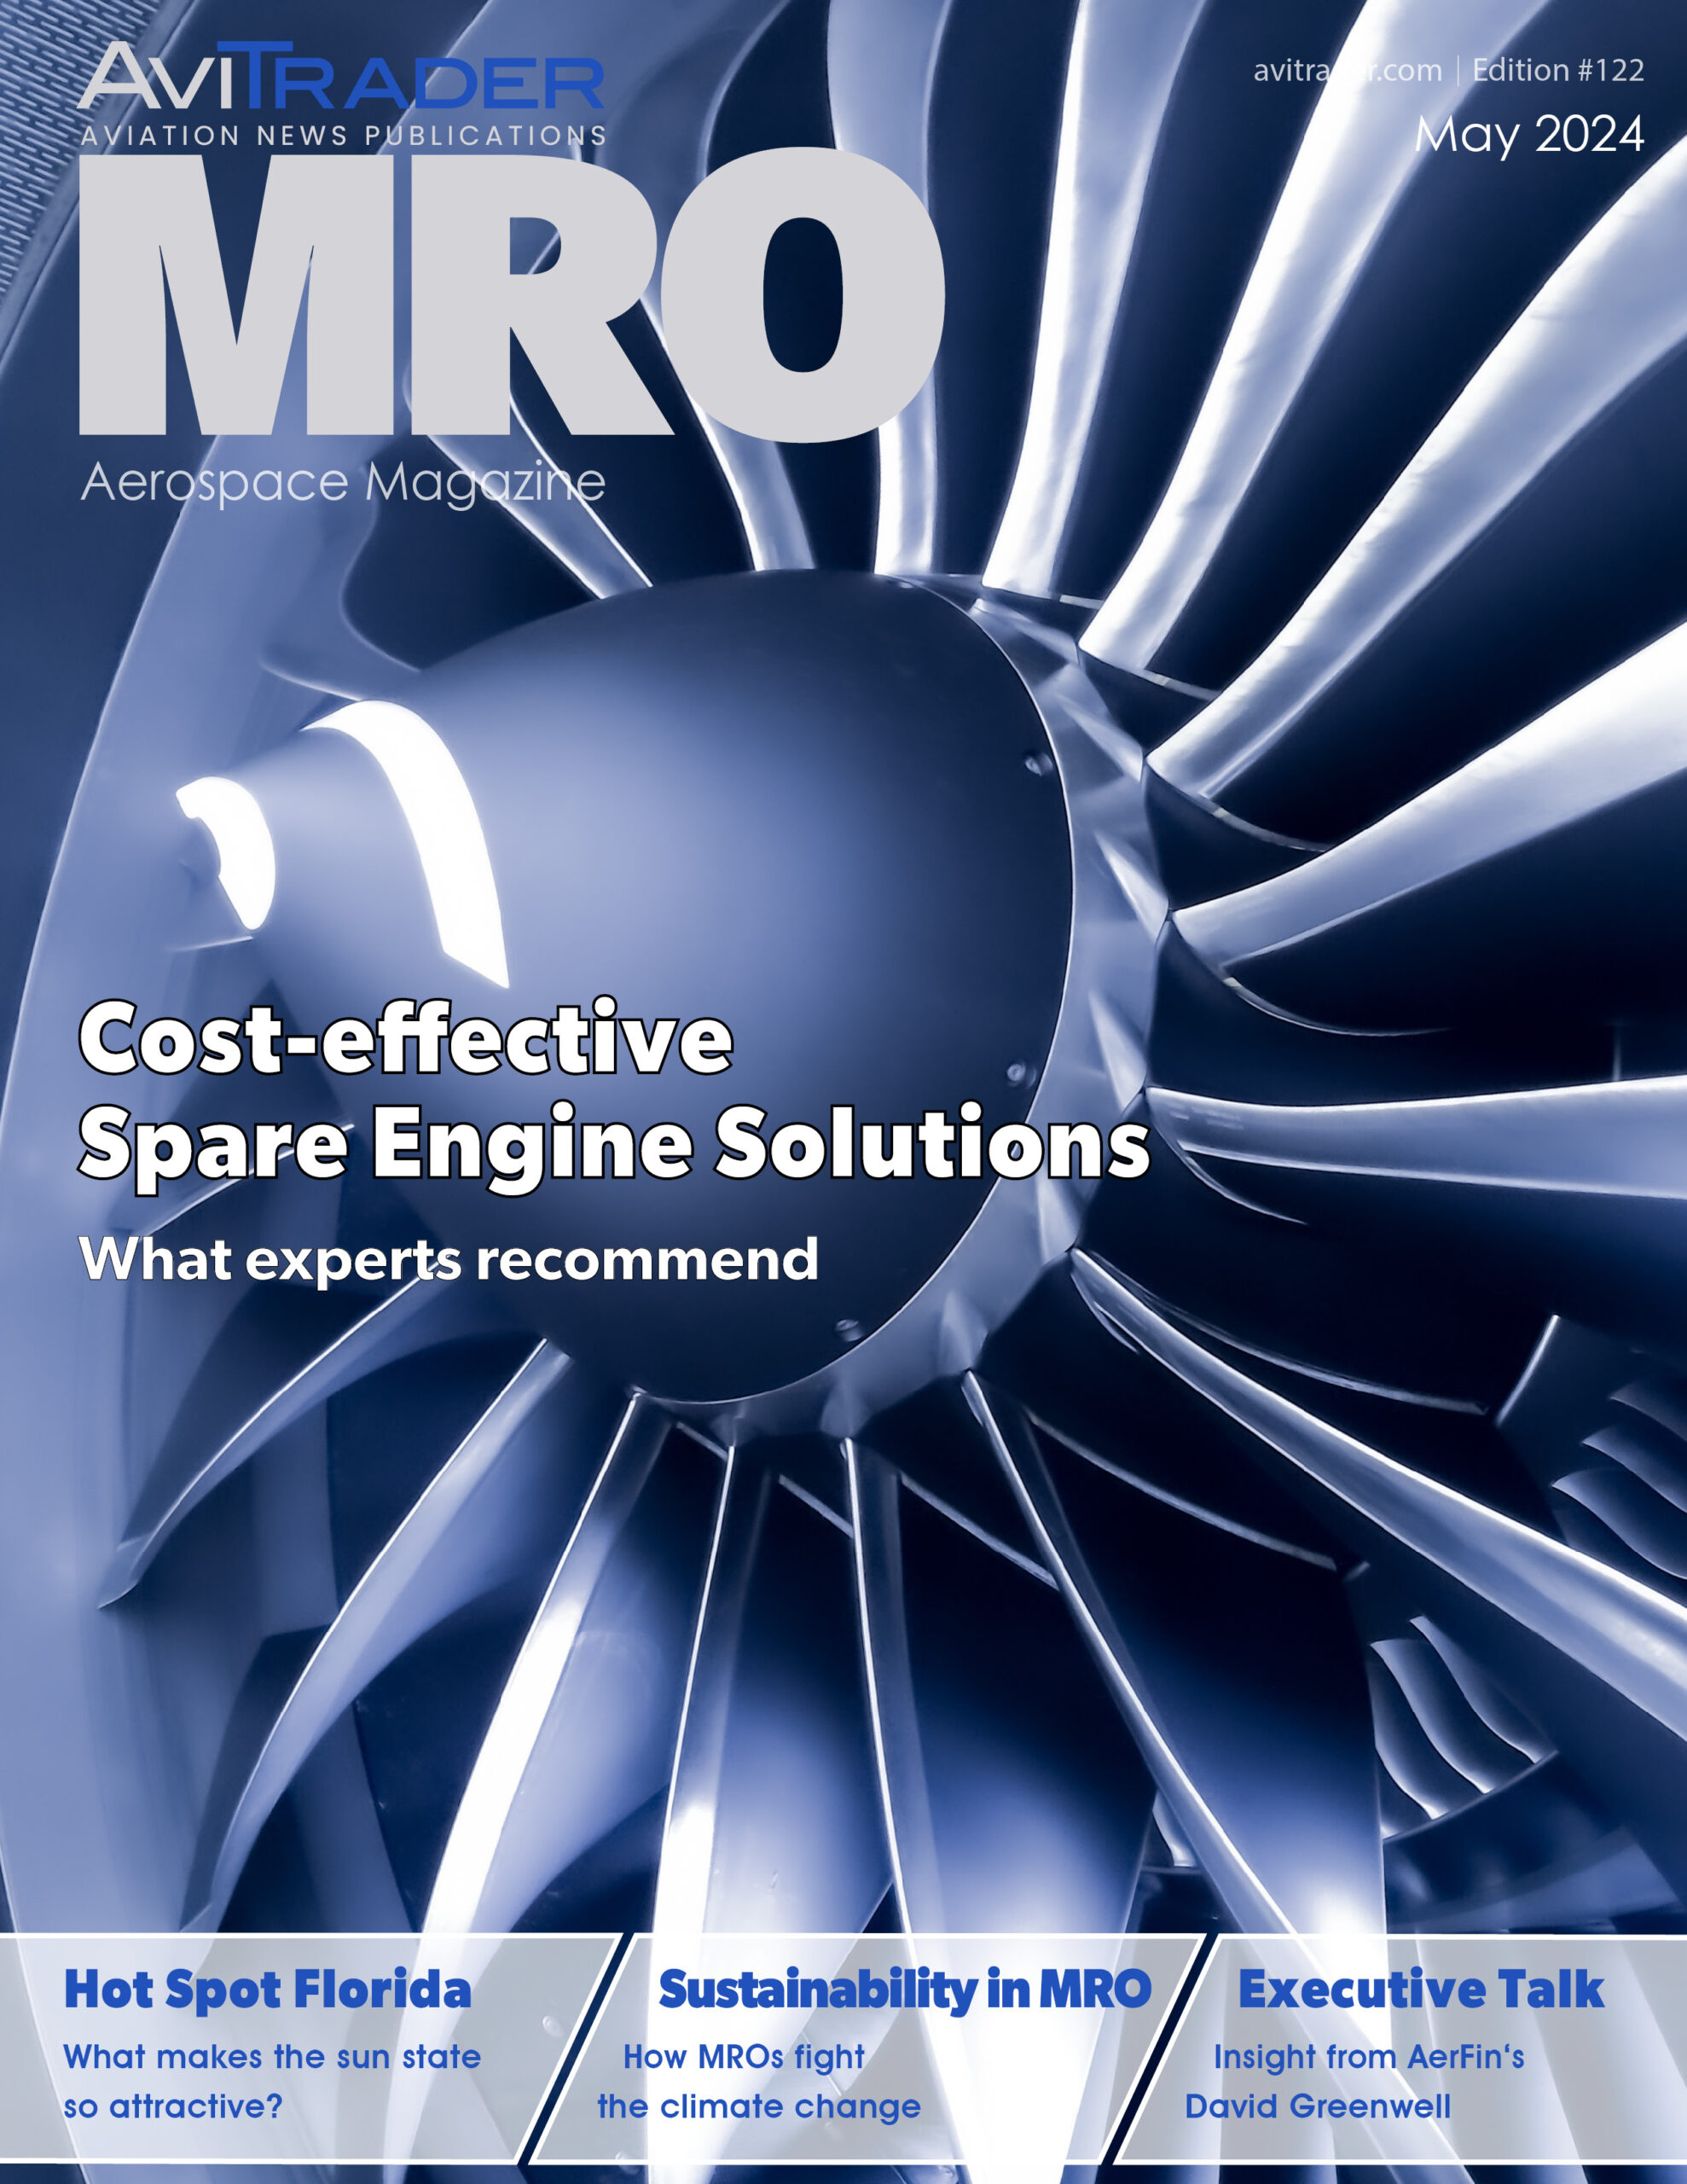 AviTrader MRO magazine Mai 2024 edition